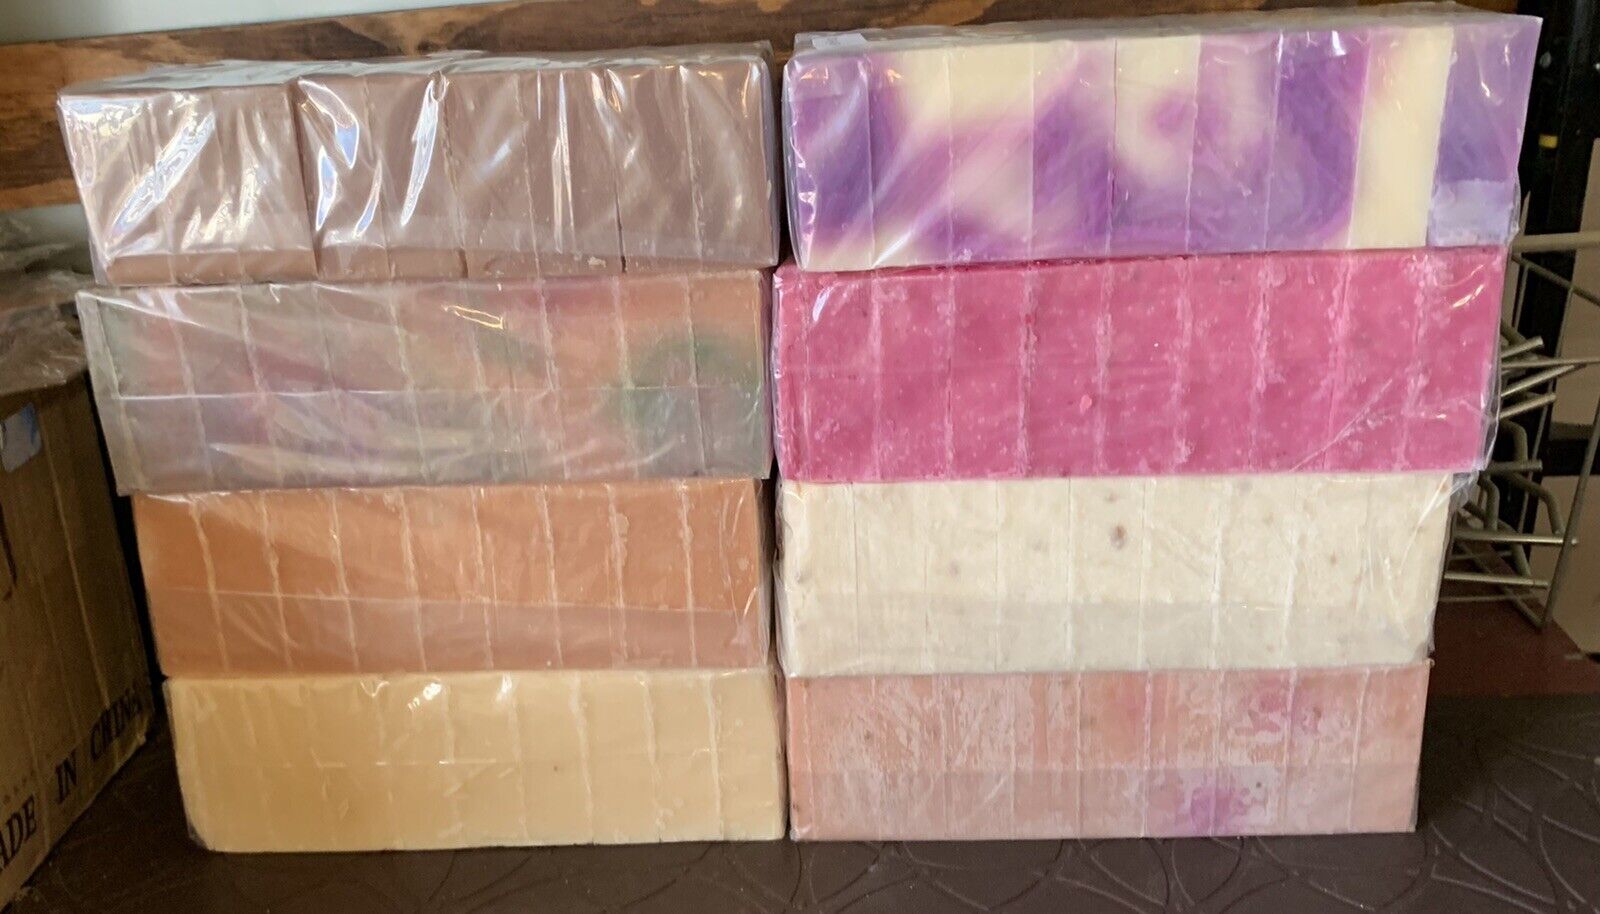 8 Individual Bars Homemade Natural Soap 2 & 1/2 Pounds Precut wholesale bulk lot